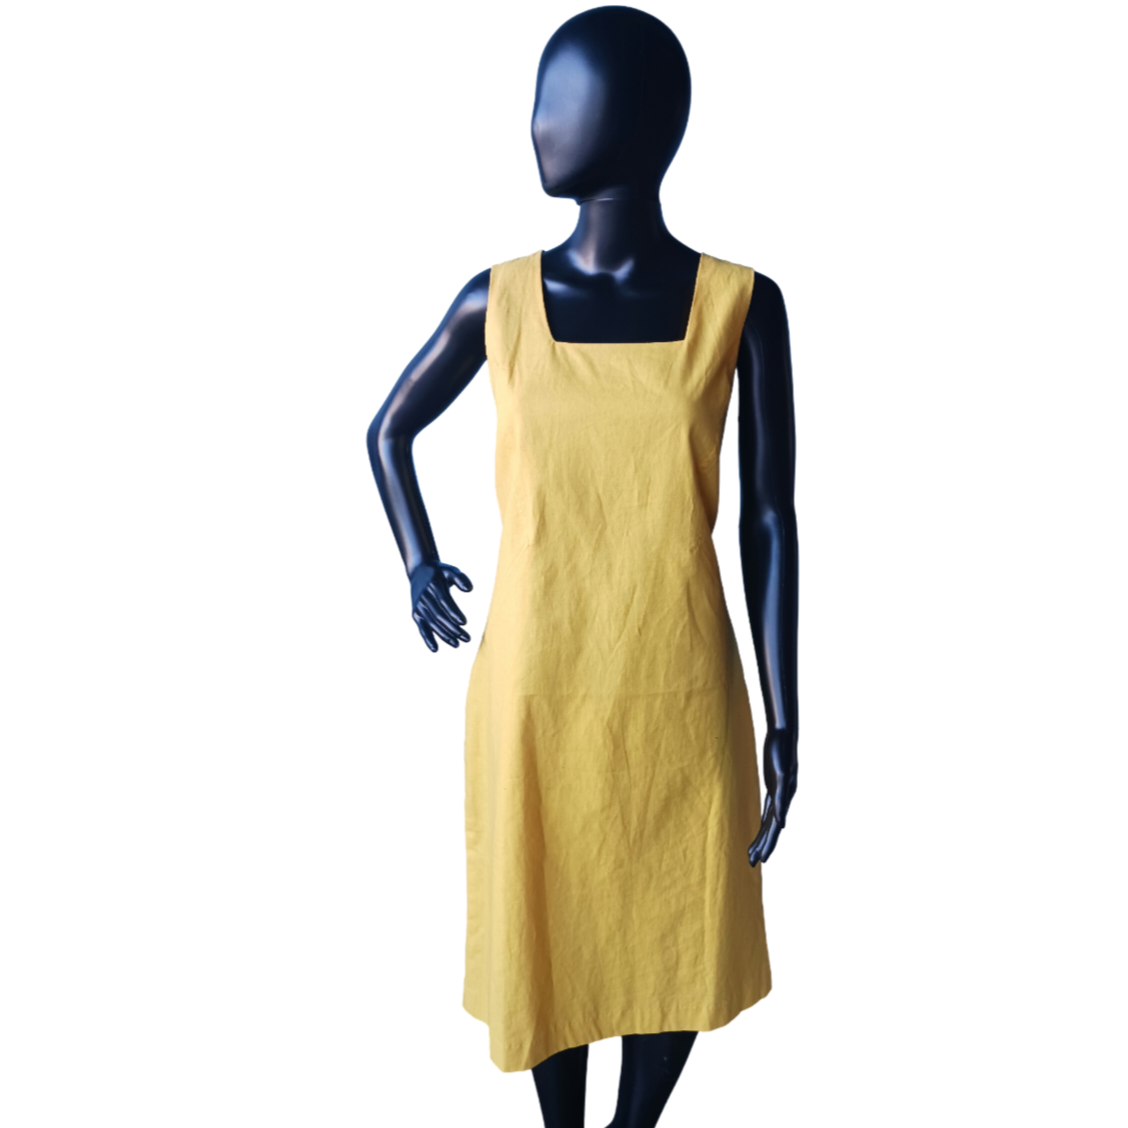 JG Hook Marigold Yellow Dress, Size 14